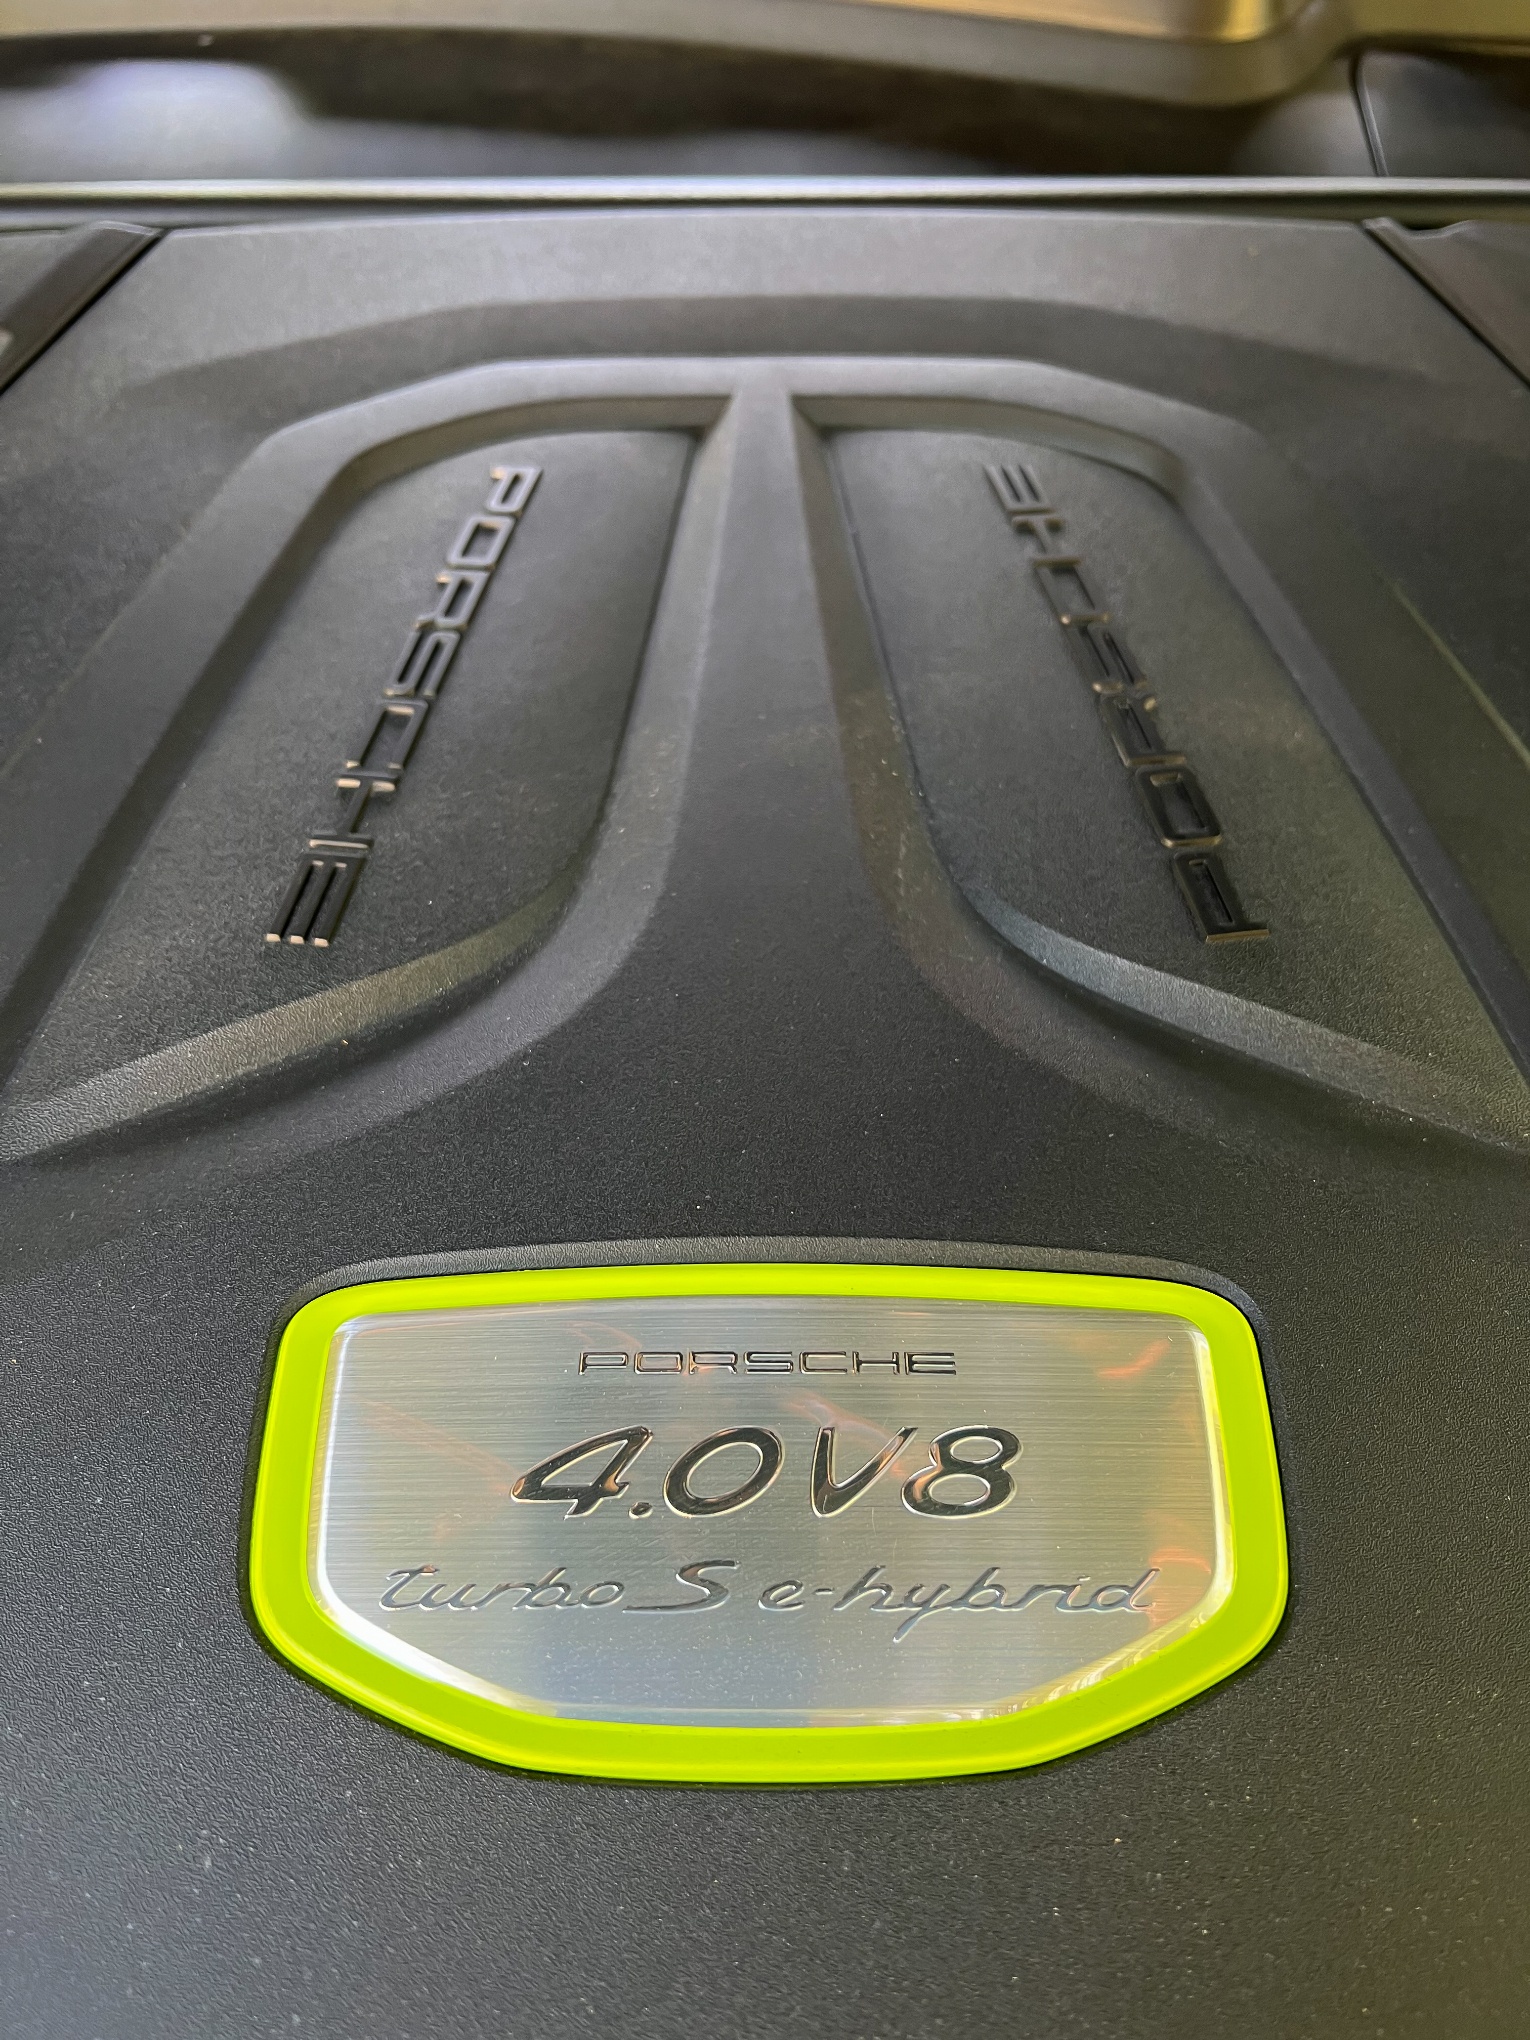  2k-Mile 2021 Porsche Cayenne Turbo S E-Hybrid Coupe